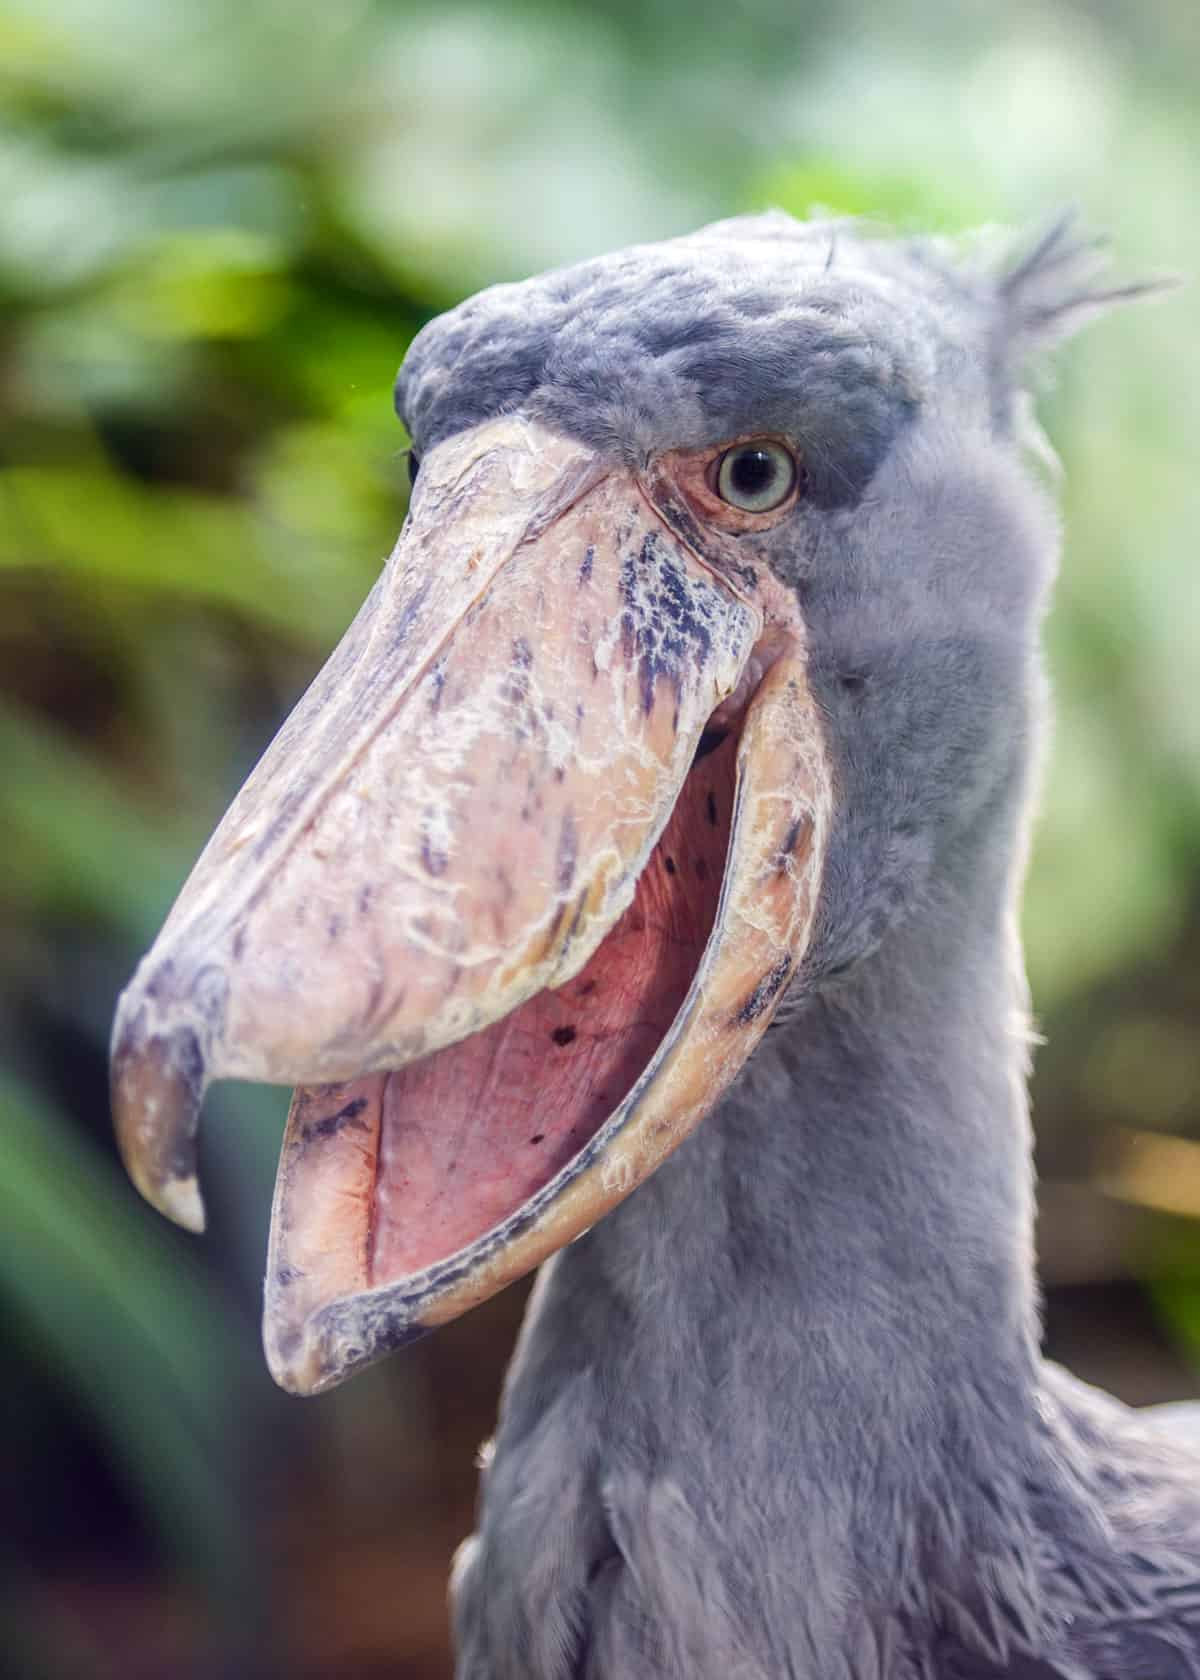 Shoebill stork